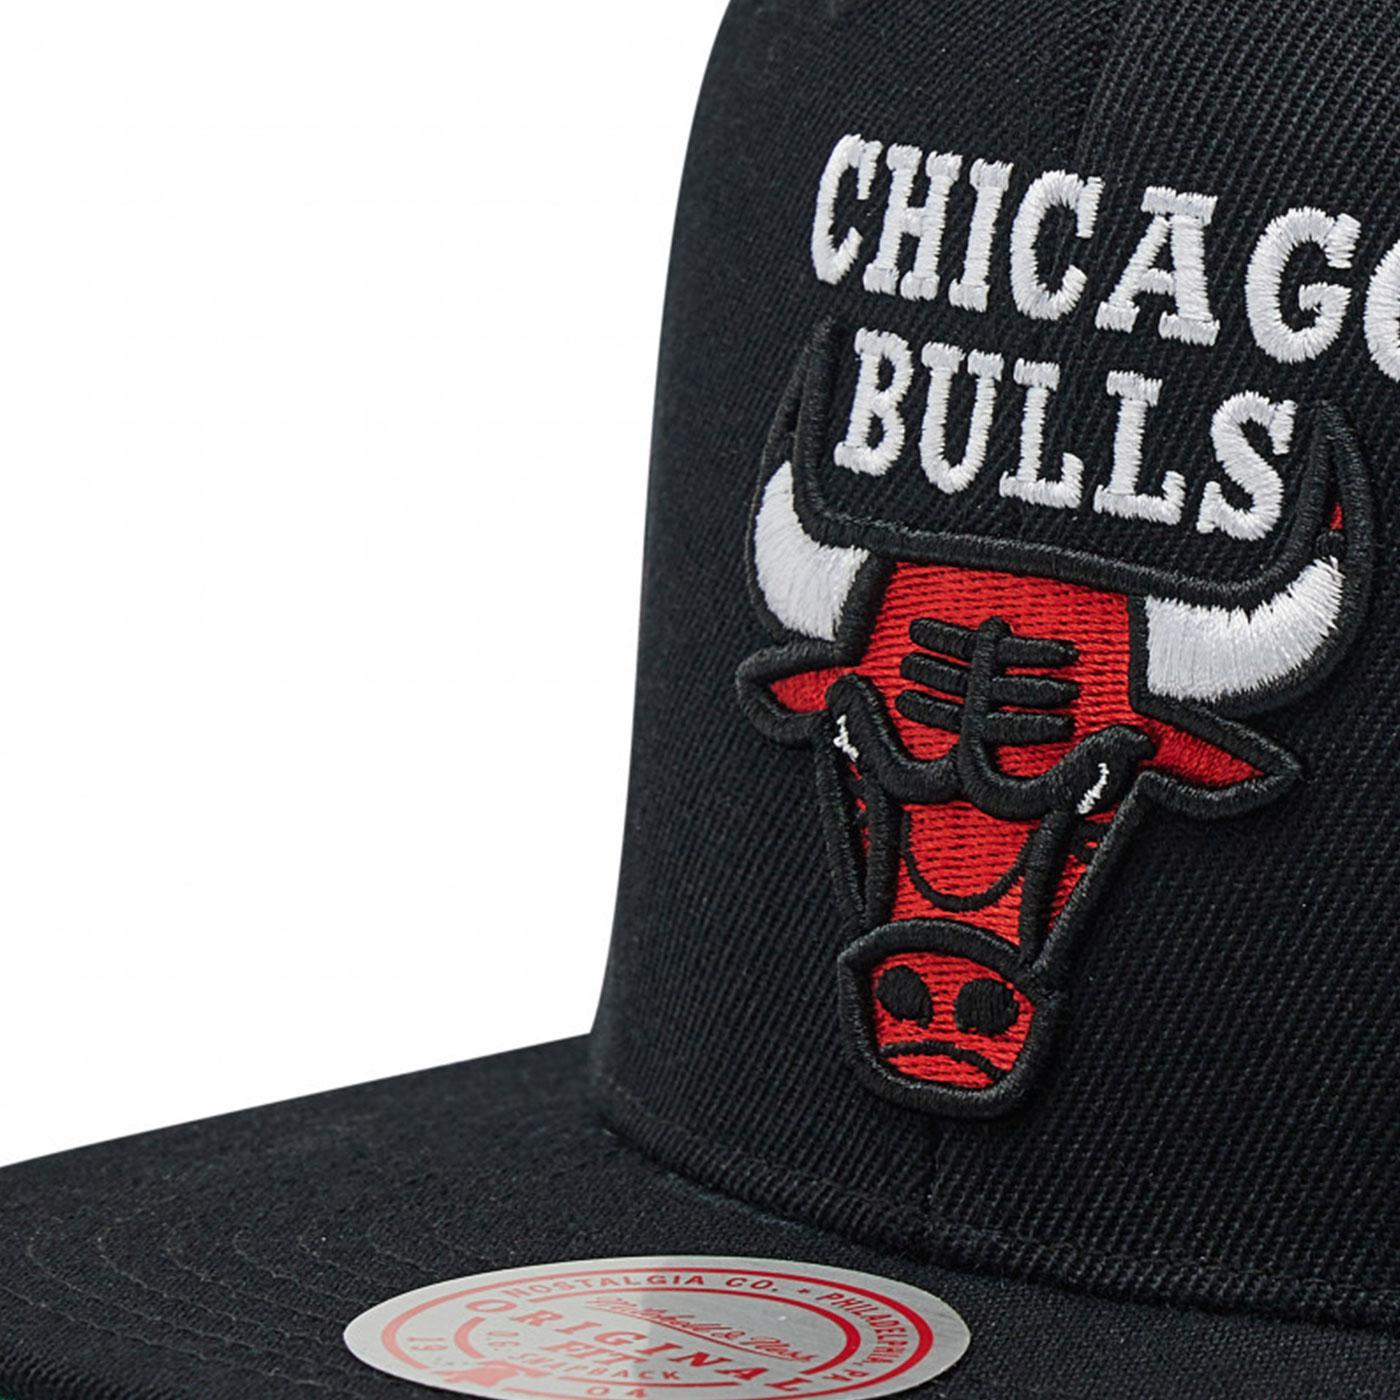 Mitchell & Ness Chicago Bulls Top Spot Black Snapback Hat